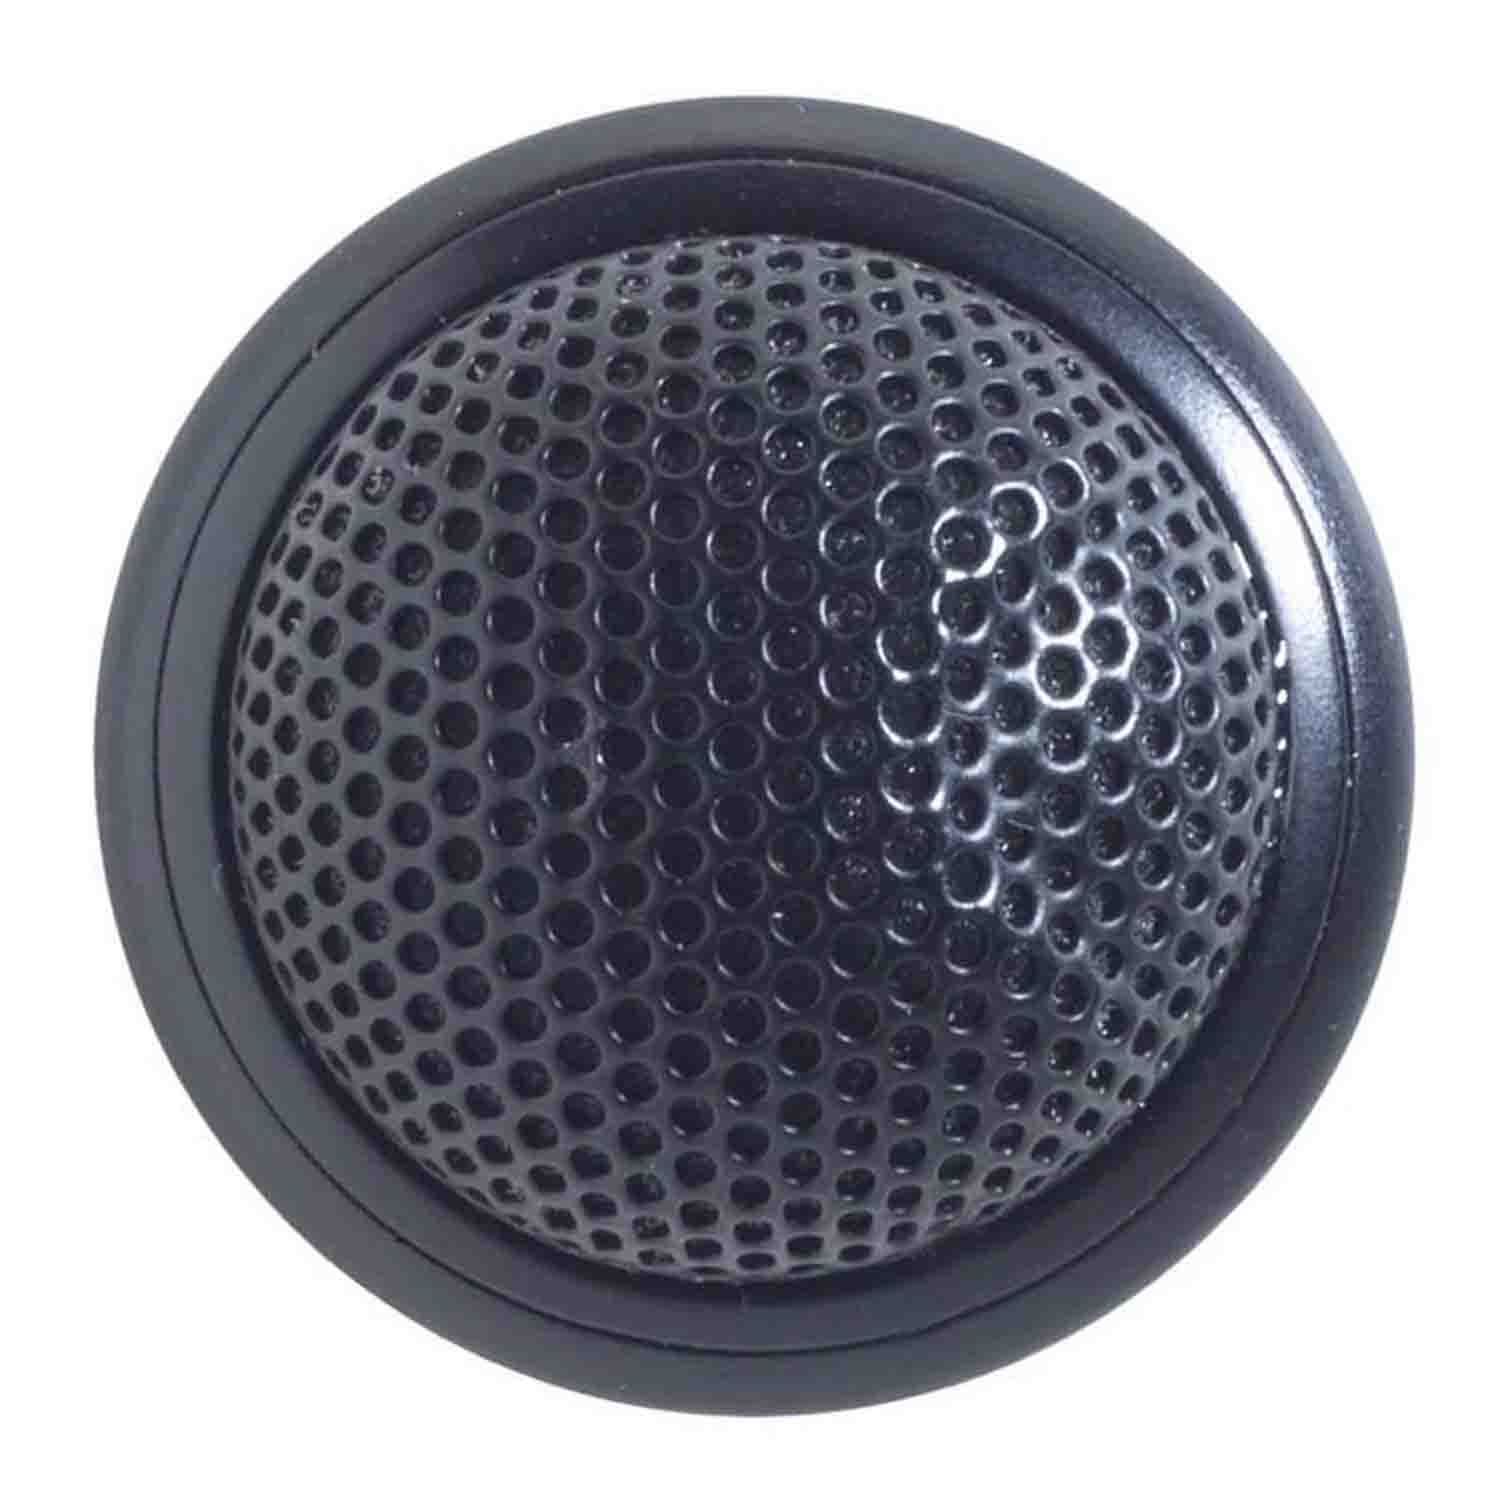 Shure MX395B/C Microflex Low Profile Boundary Microphone XLR - Black by Shure